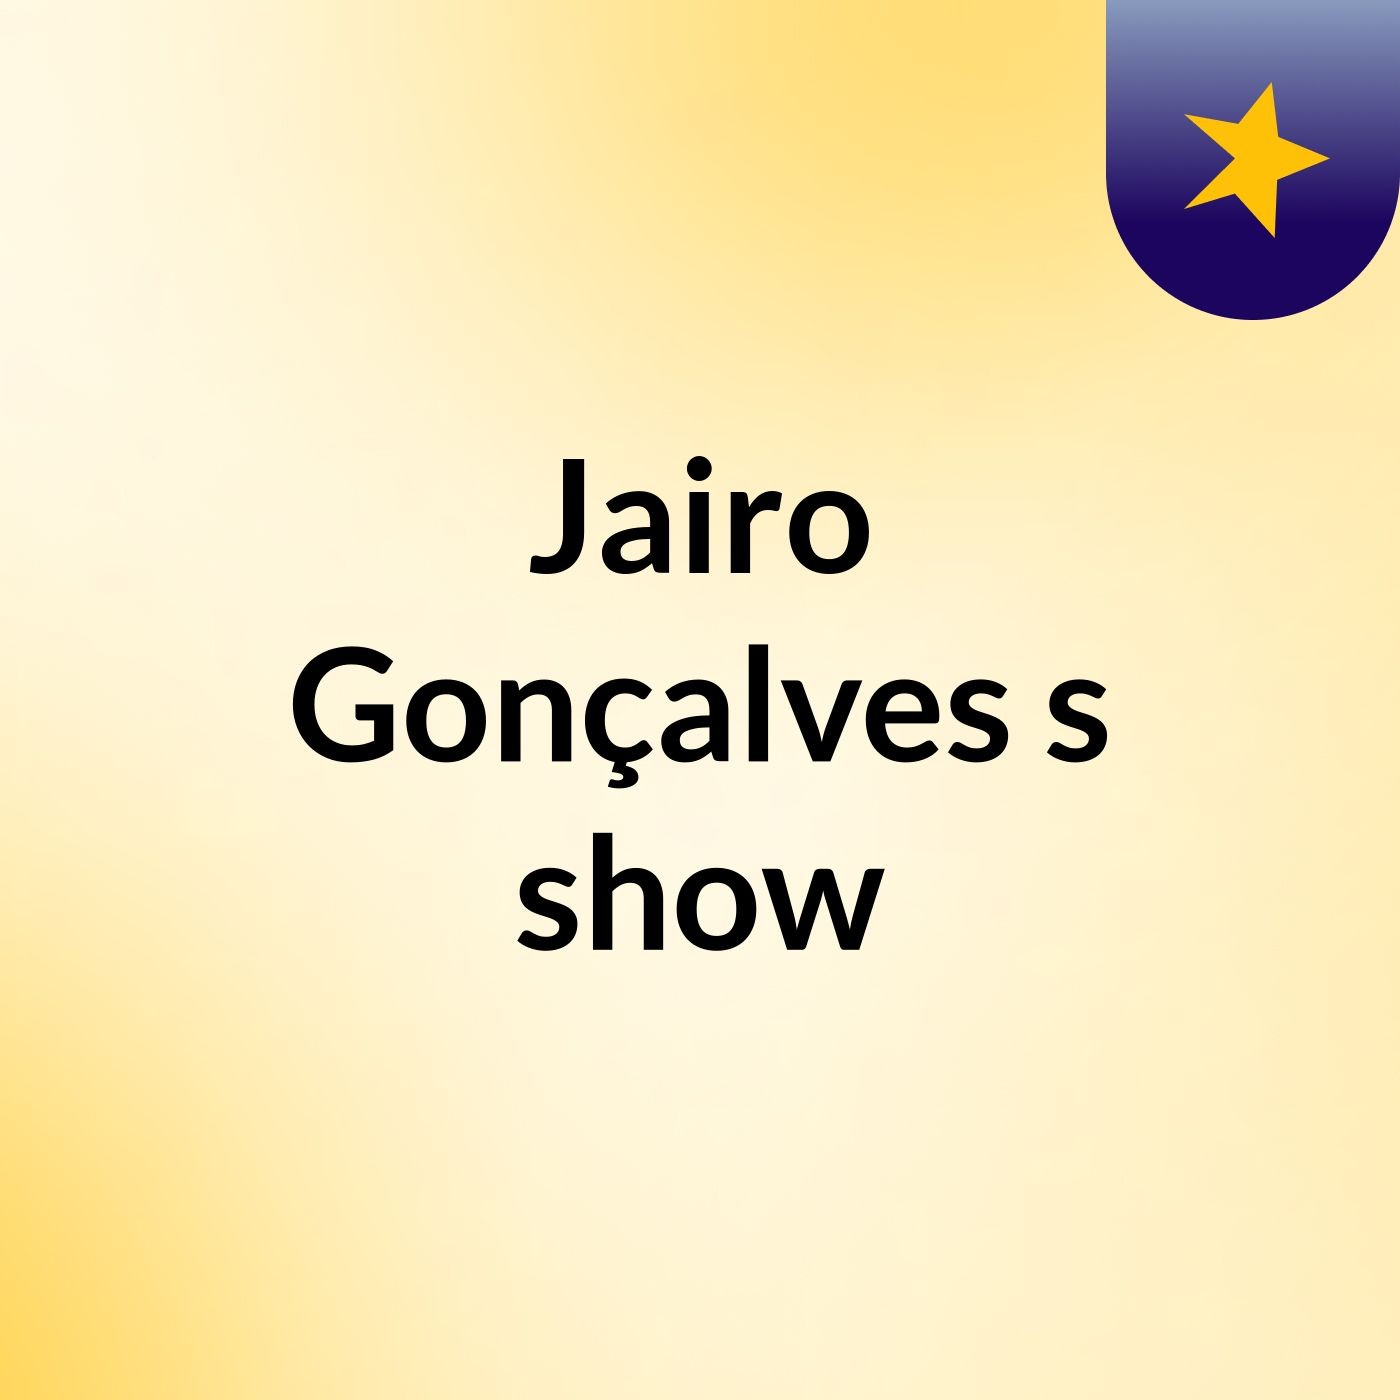 Jairo Gonçalves's show